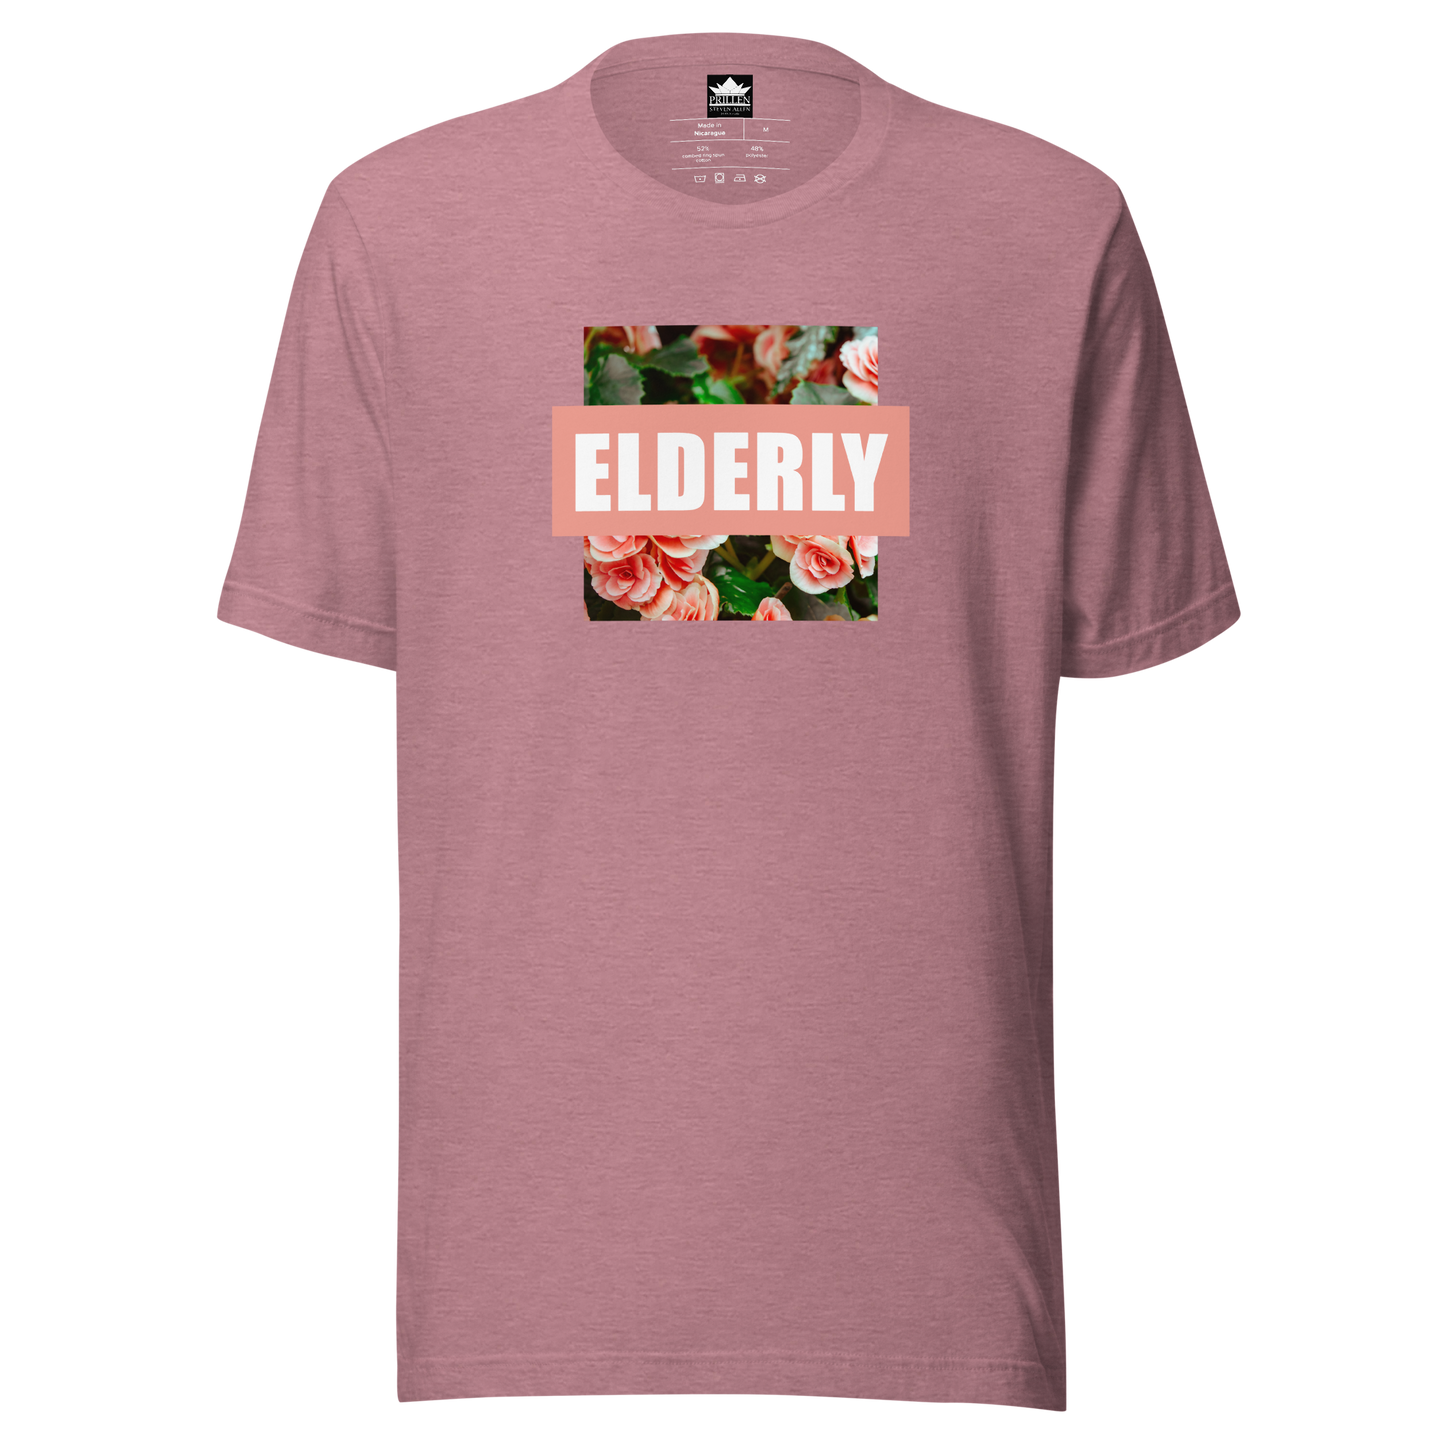 Prillen Elderly Flowers T-Shirt